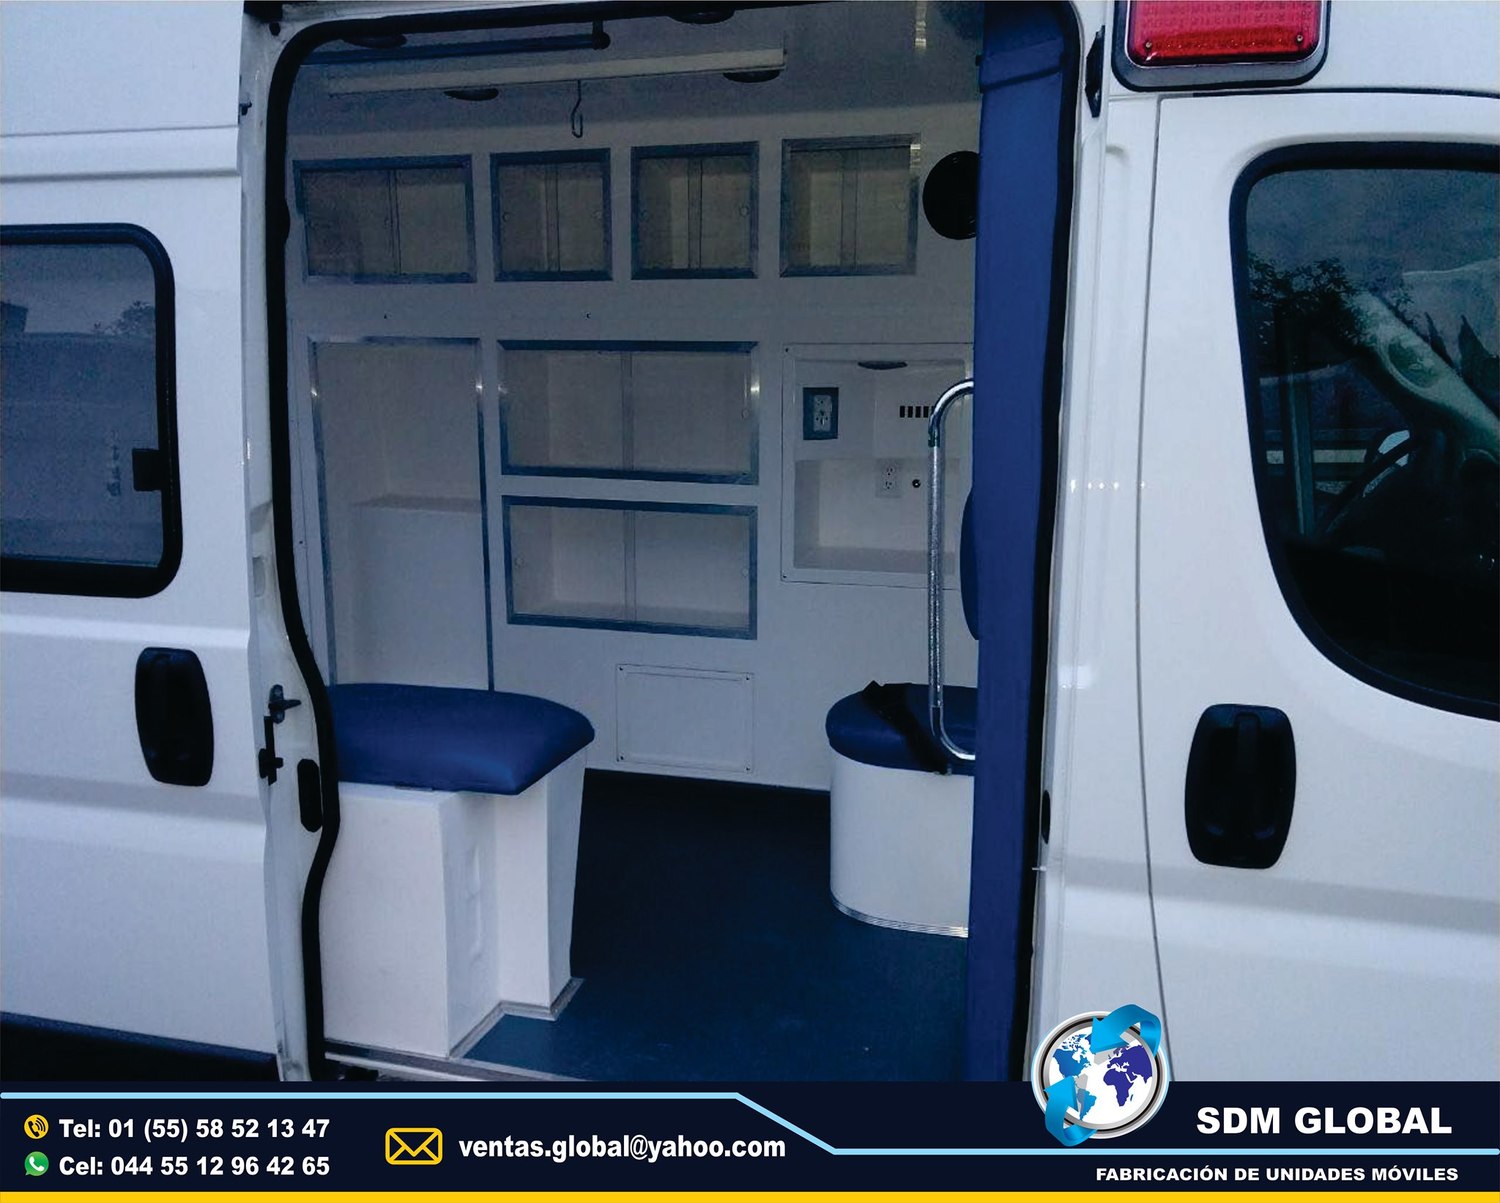 <span style="font-weight: bold;">Conversion de Ambulancias de traslado en SDM Global Mexico</span><br>